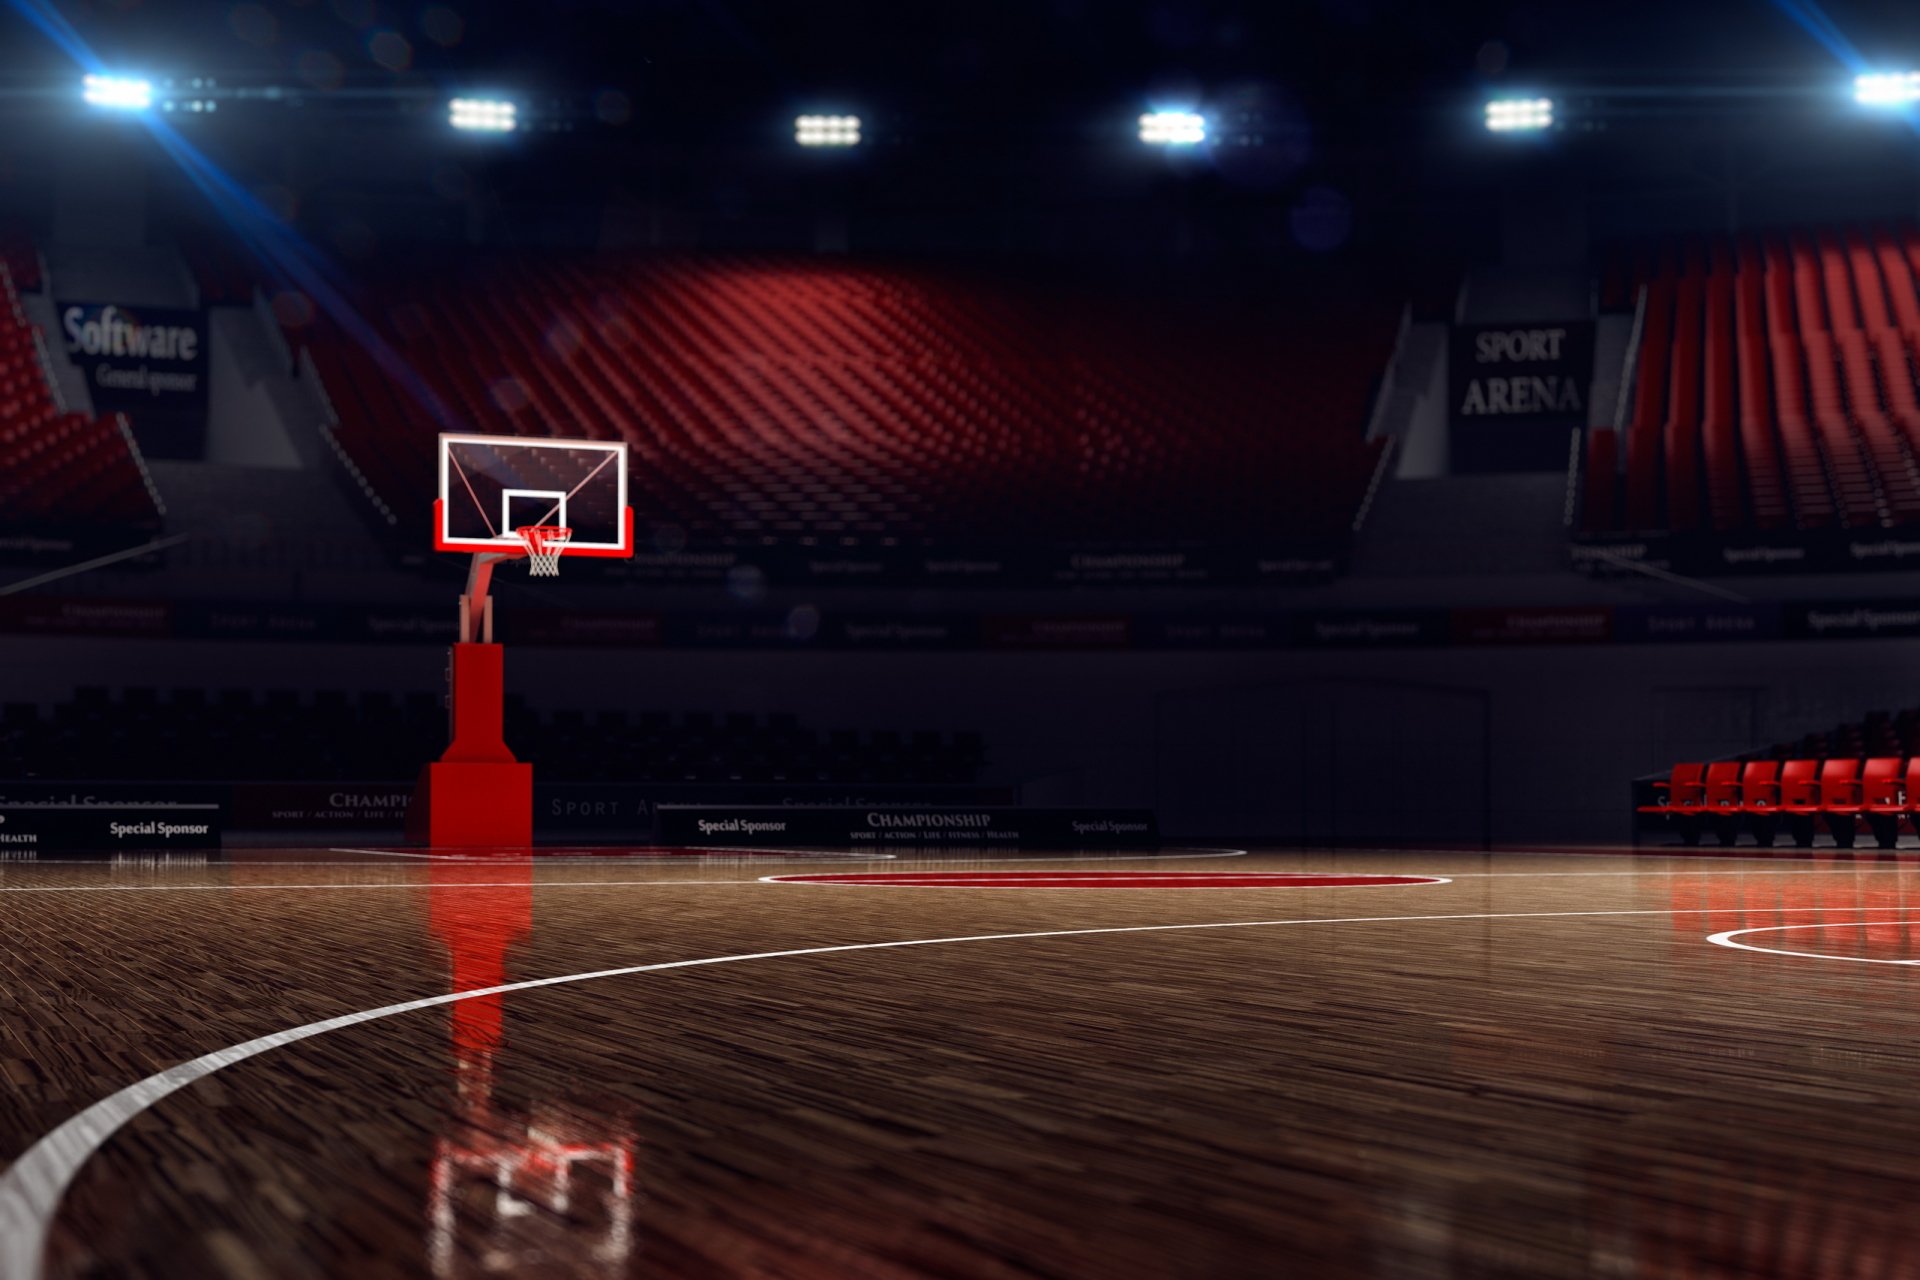 basketball court wallpaper hd,red,sport venue,arena,screenshot,pc game